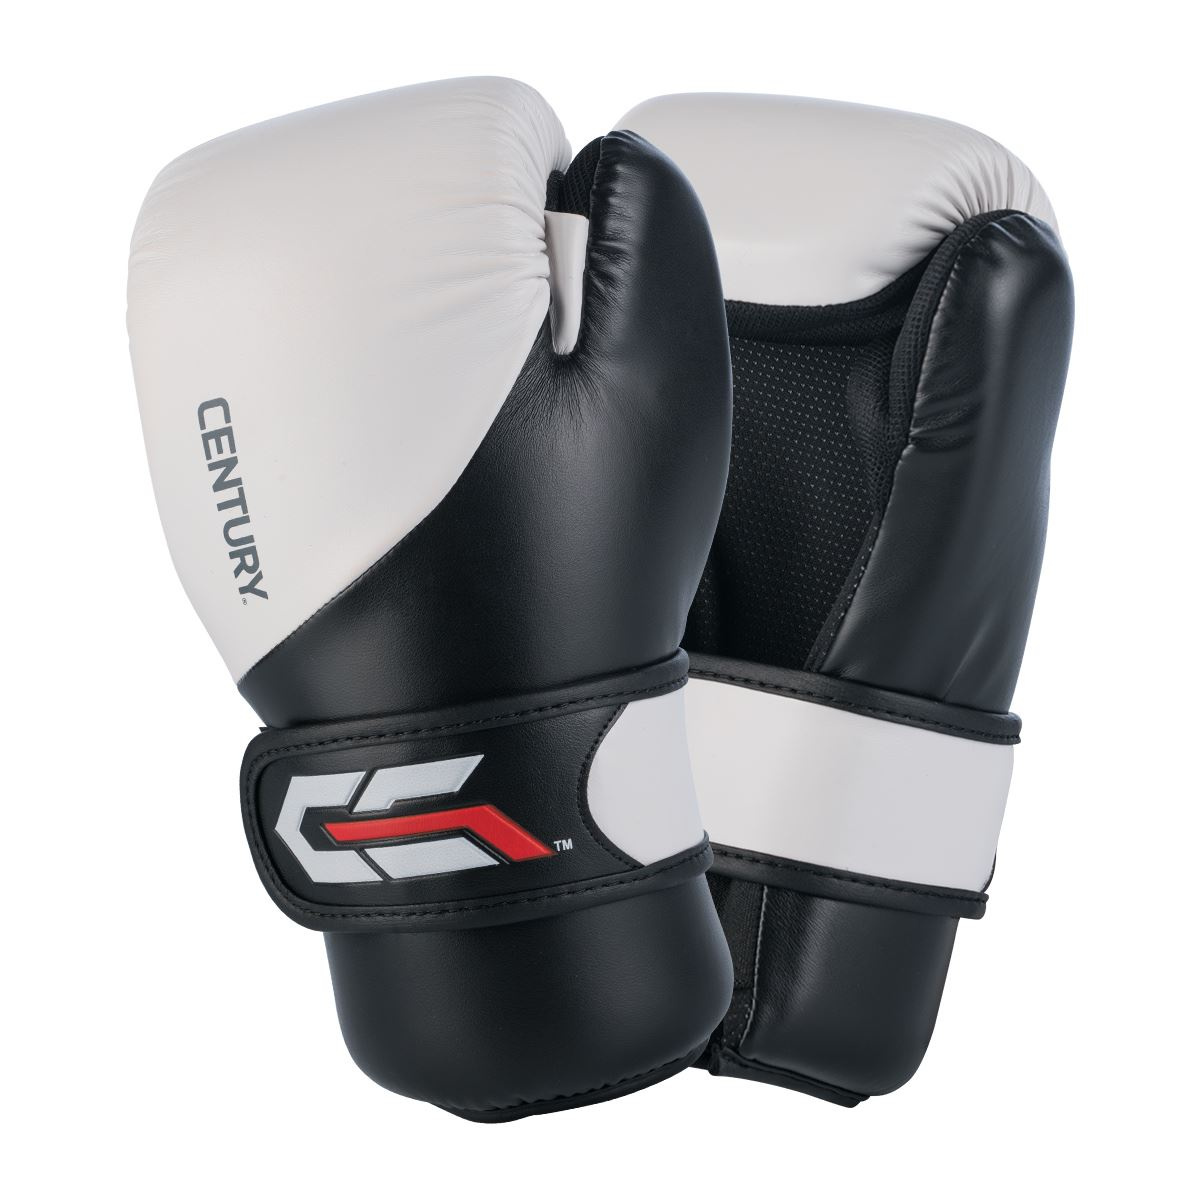 C-Gear WHITE/BLACK в Москве по цене 4990 ₽ в категории боксерские мешки и груши Century